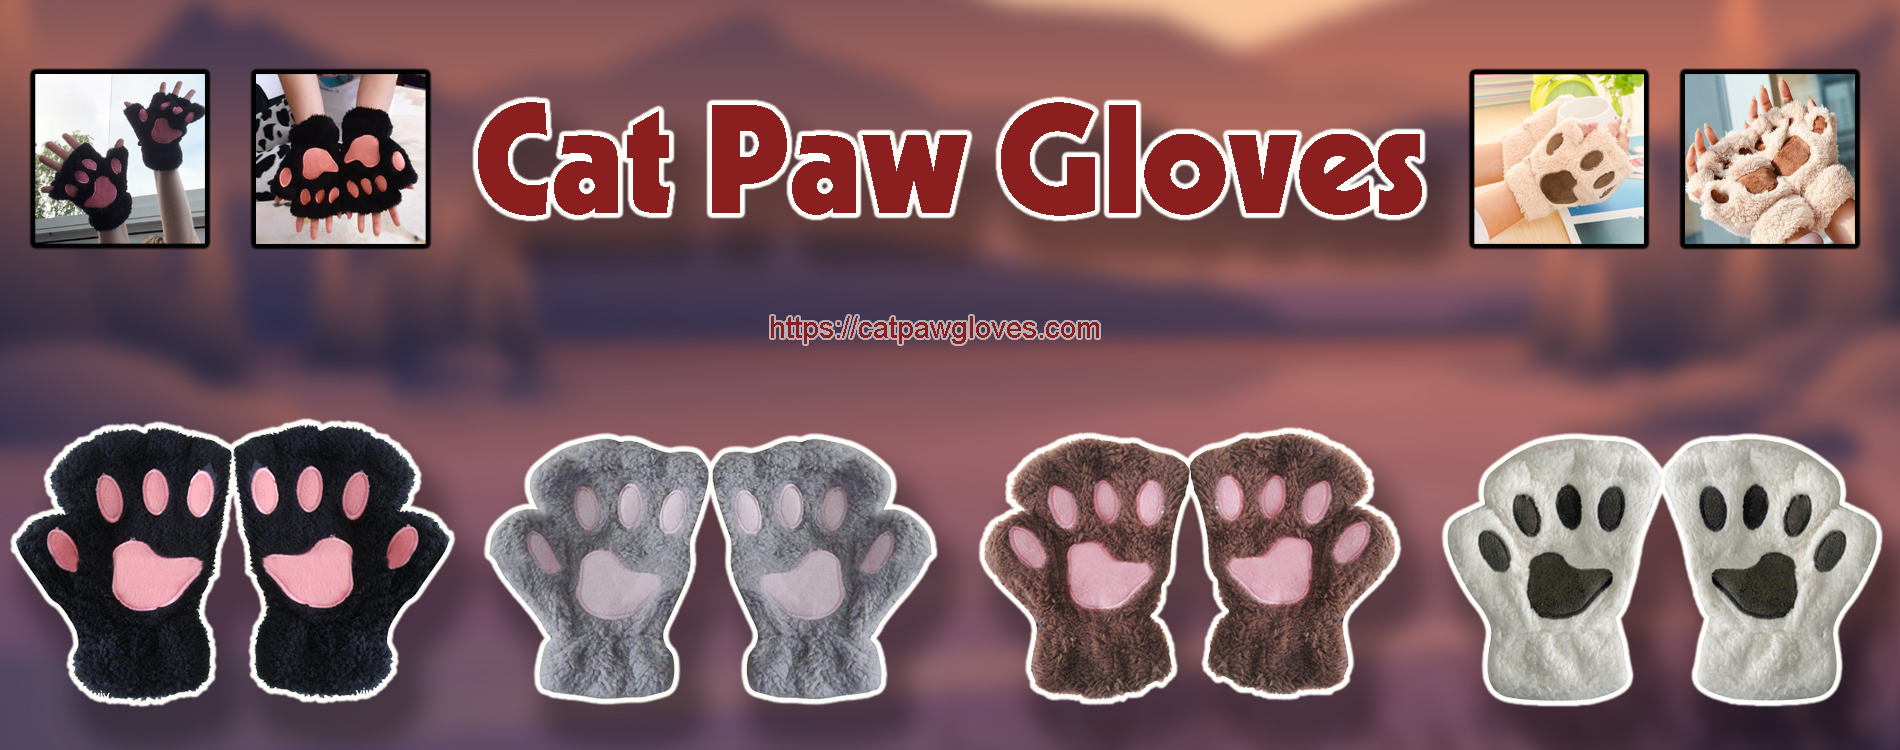 cat-paw-gloves-banner